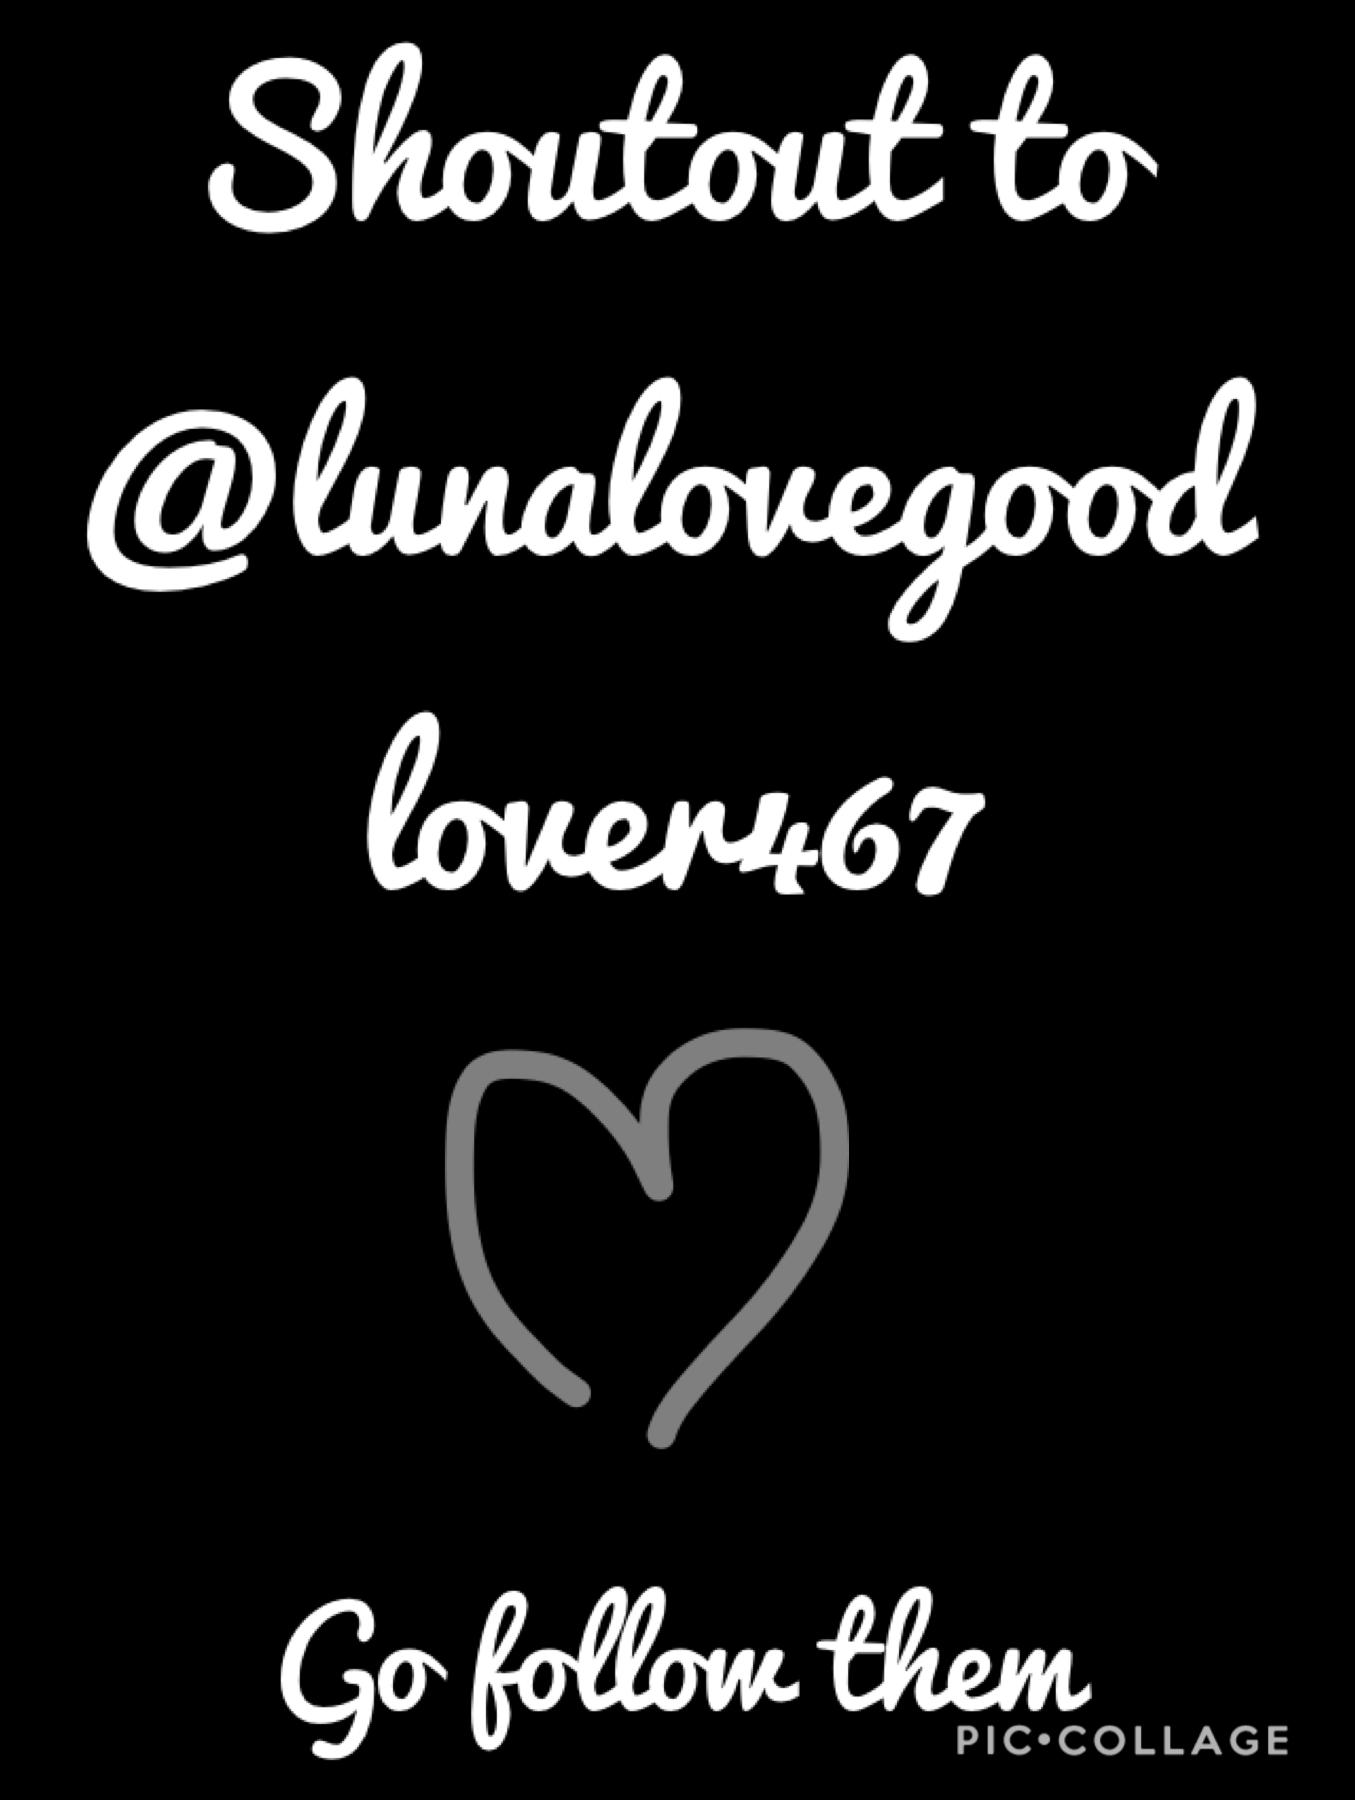 Follow them @lunalovegoodlover467